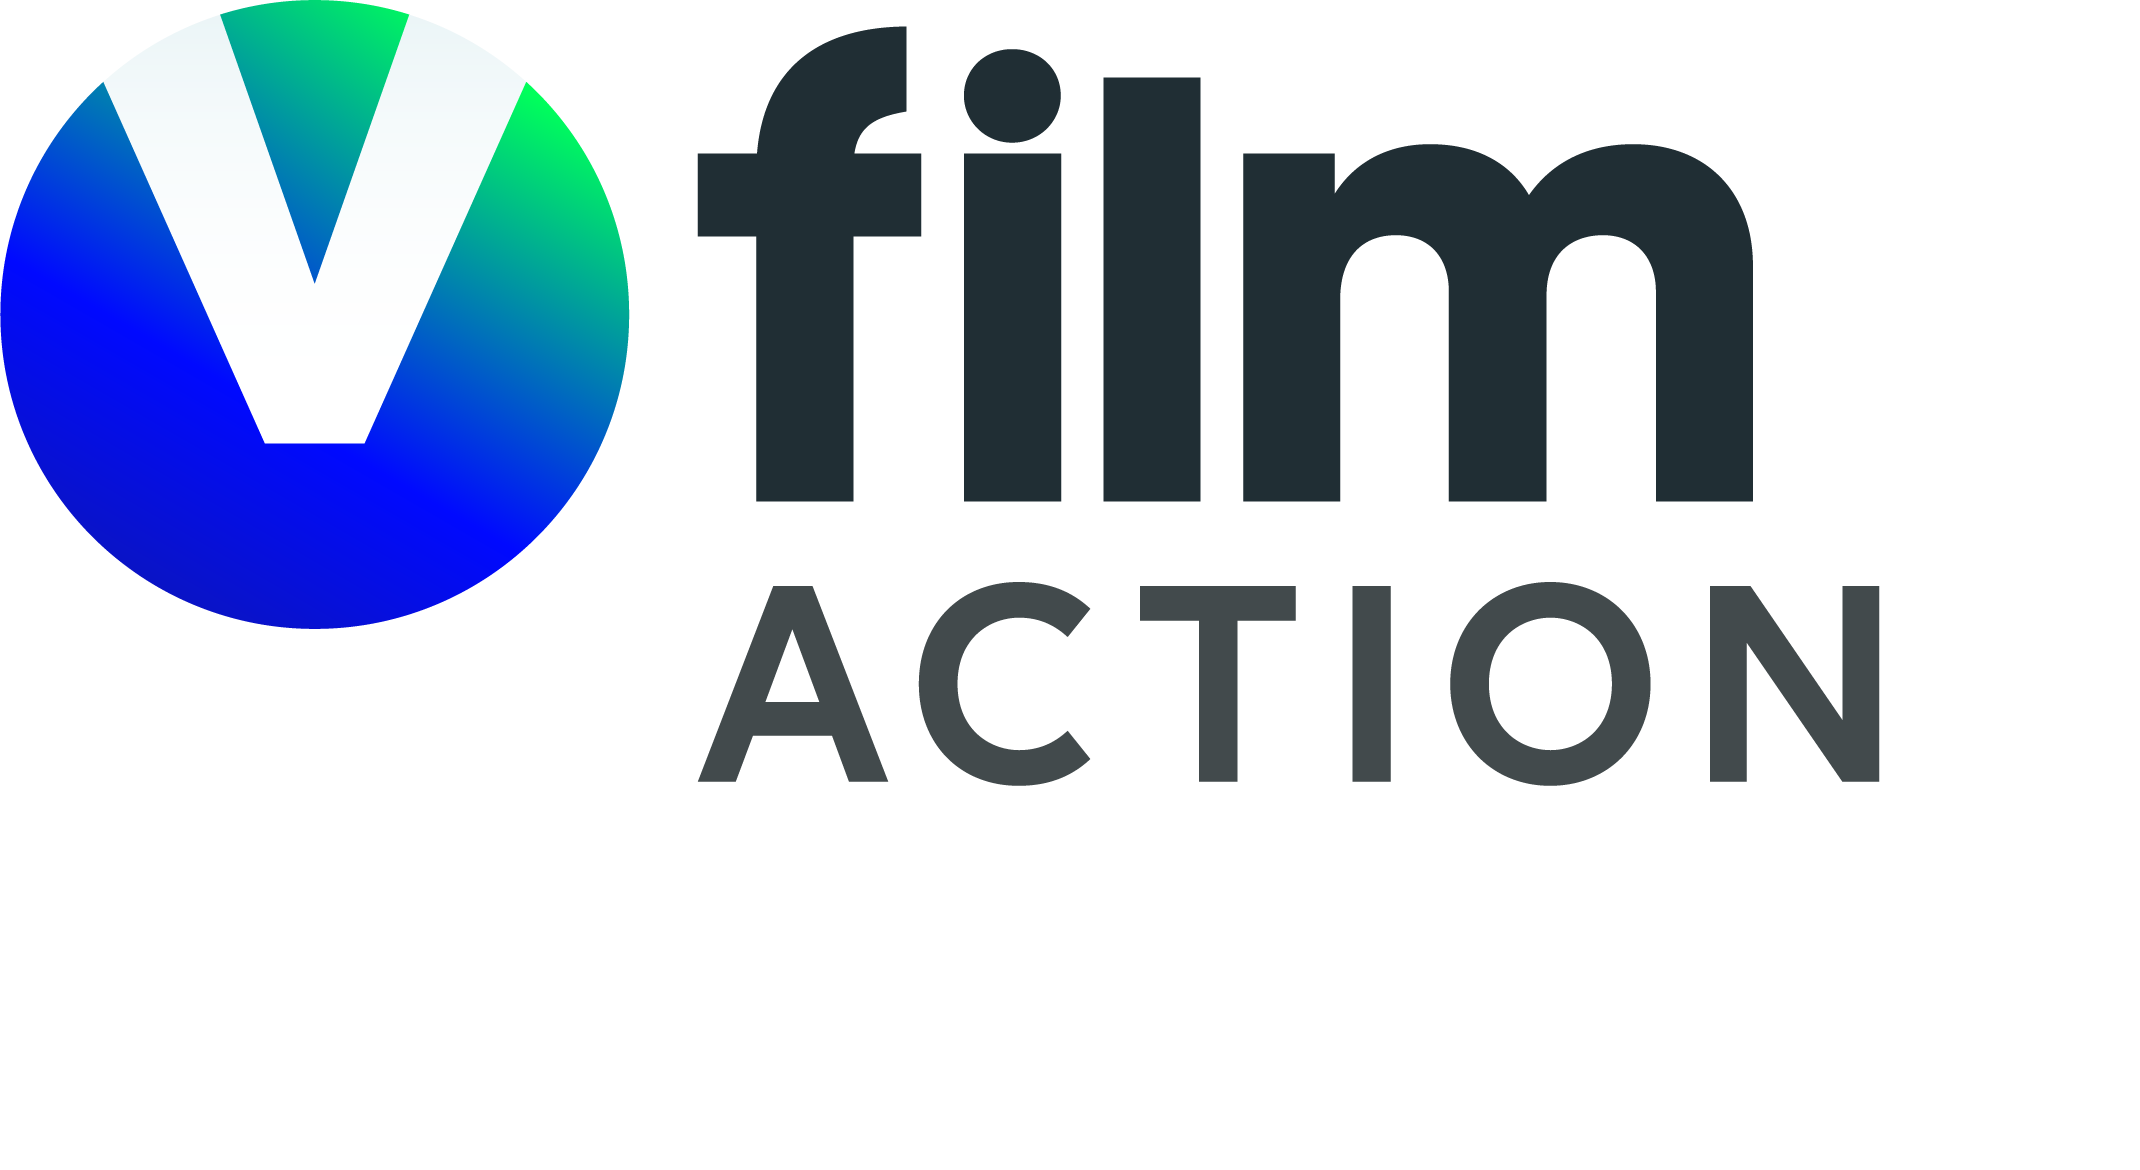 Viasat Film Action Denmark